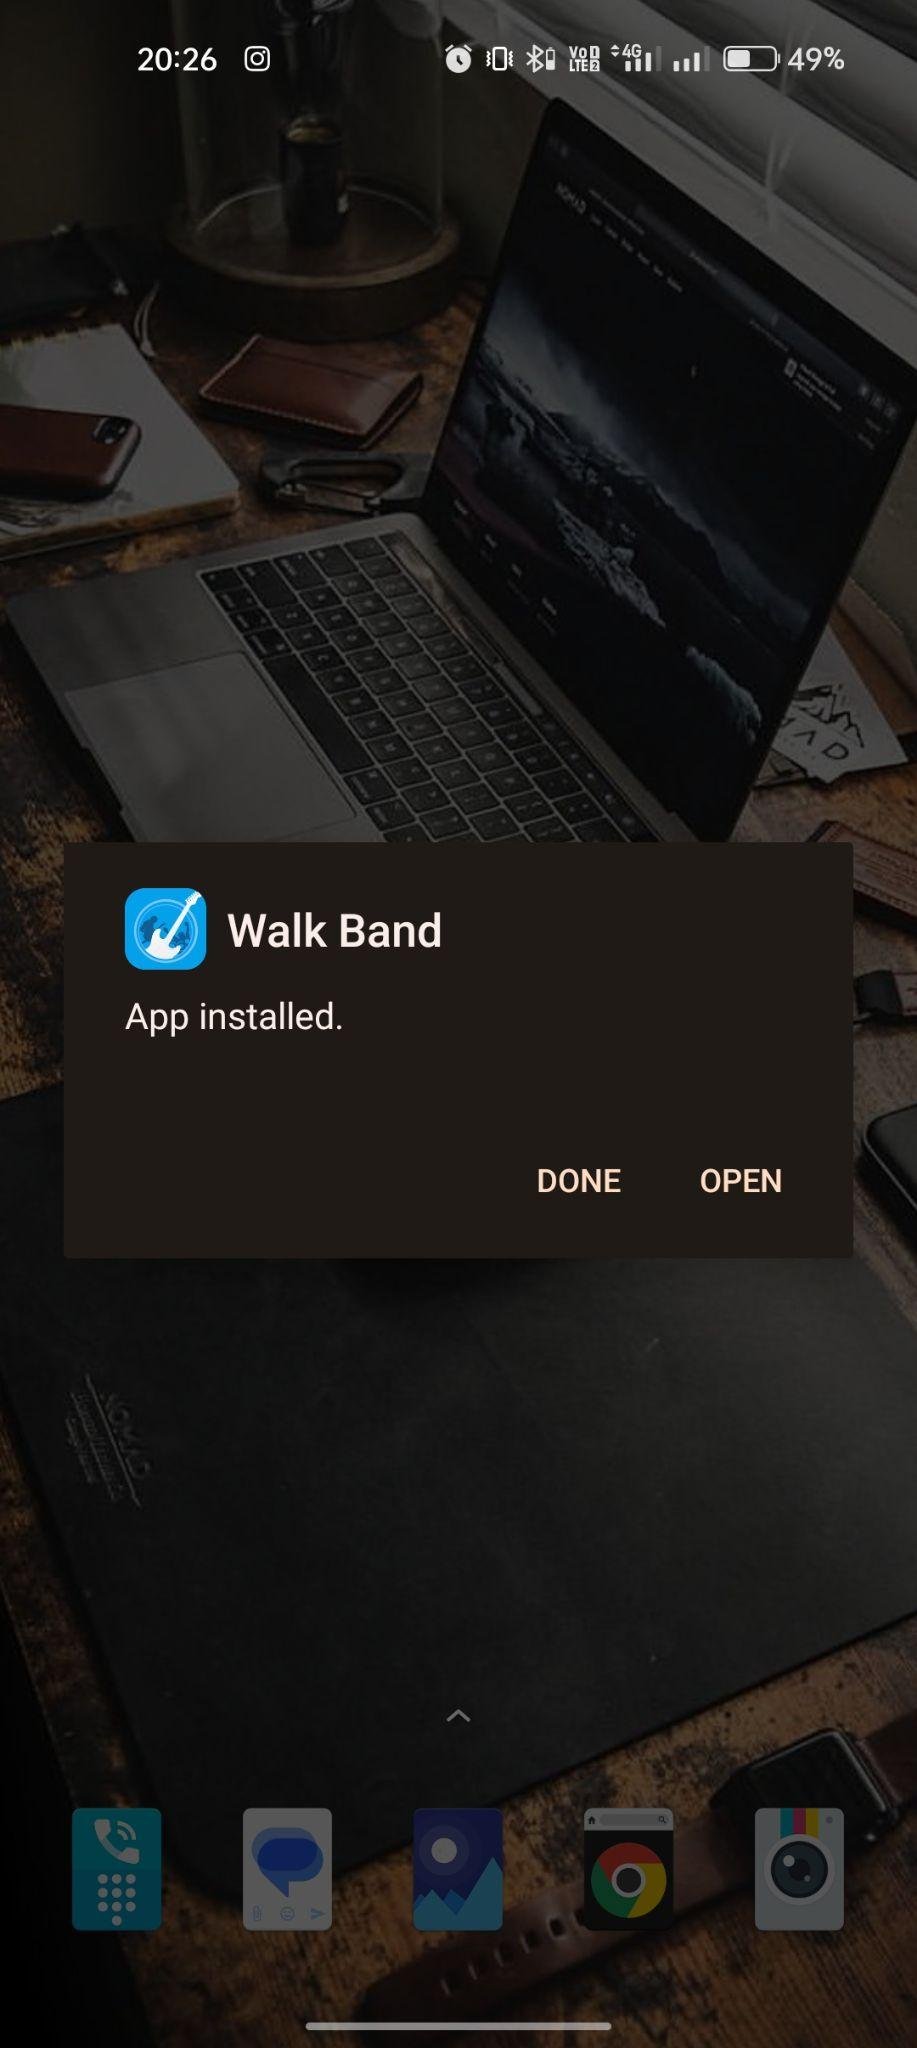 Walk Band apk installed